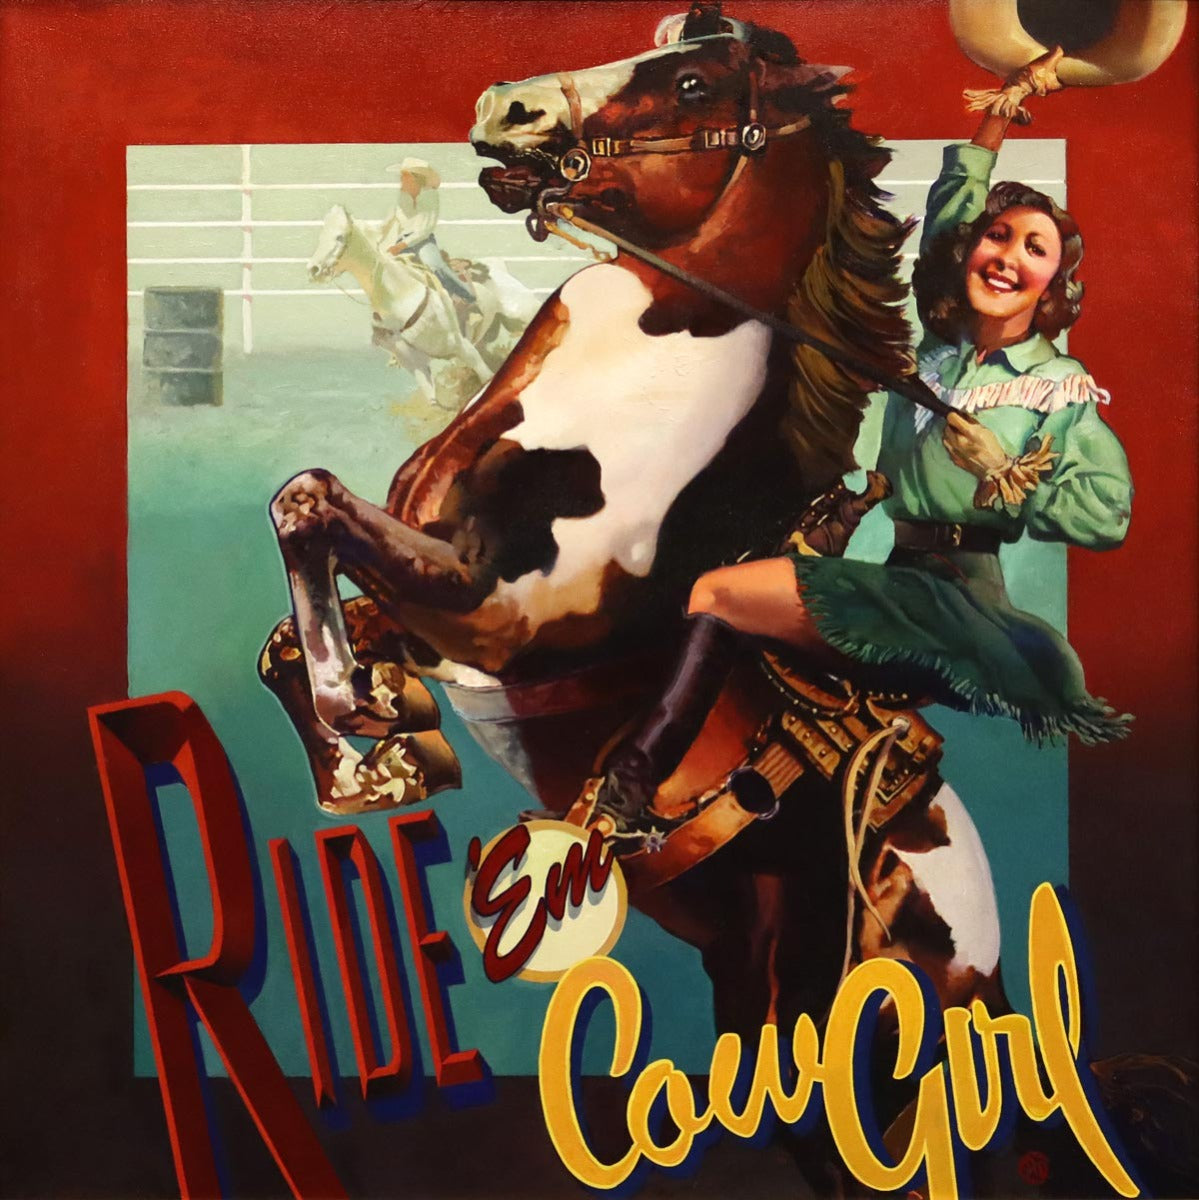 Robert Rodriquez - Ride 'Em Cowgirl (PLV91884A-0123-001)
